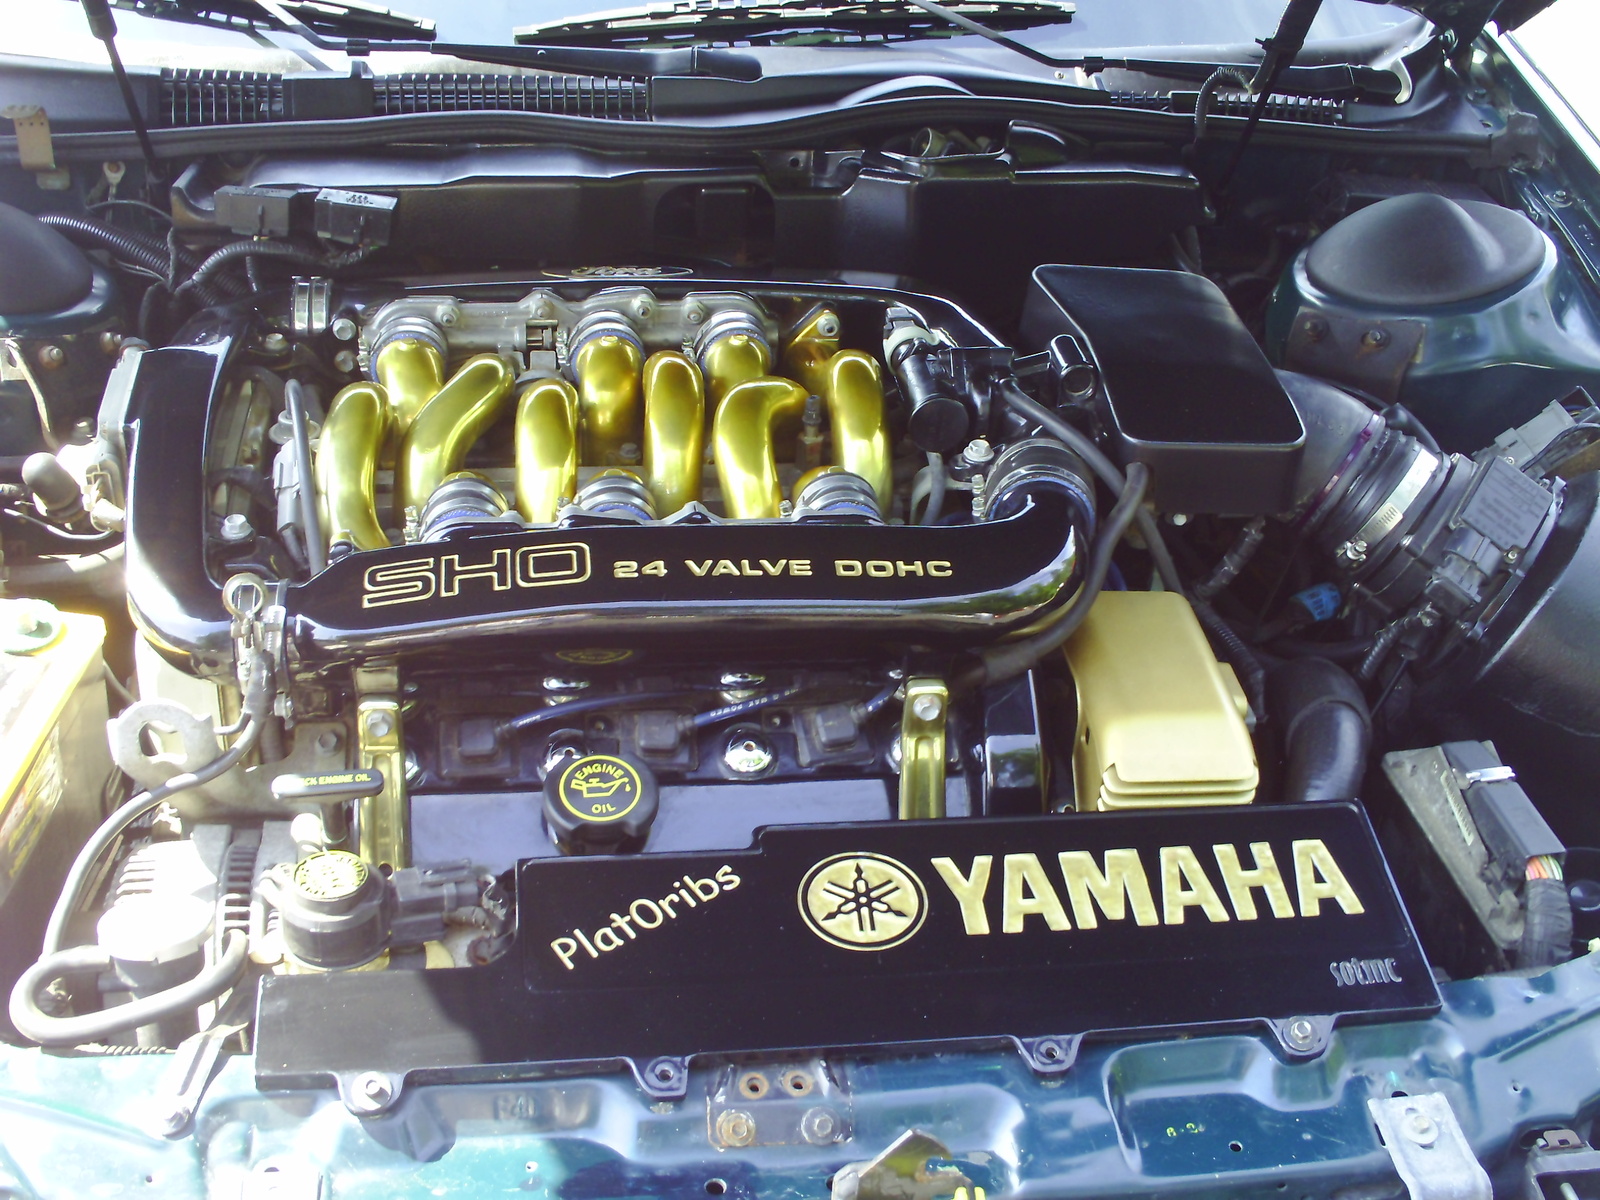 Yamaha engine in ford taurus #9